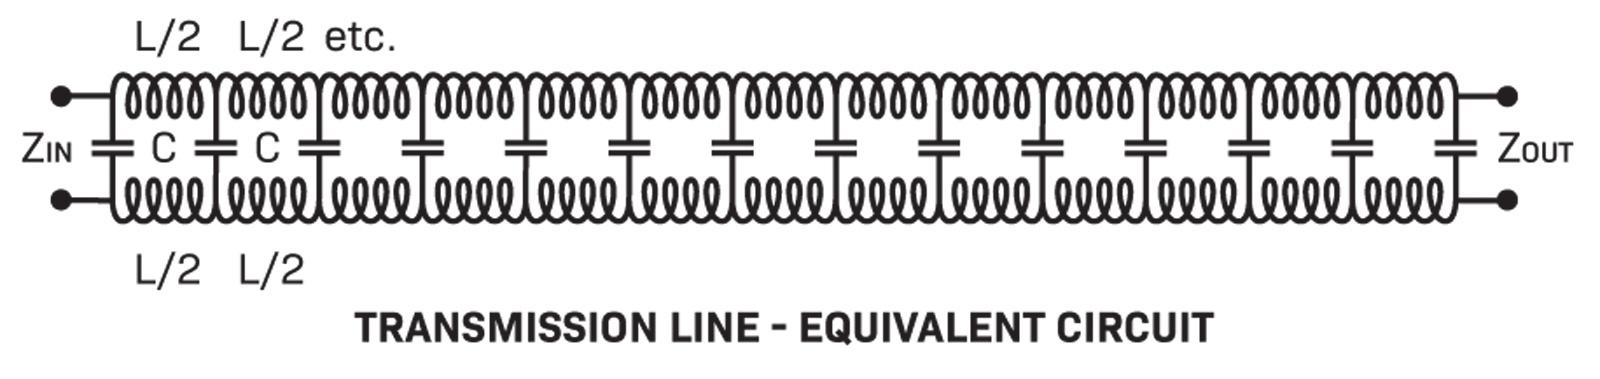 transmission line - equivalent circuit